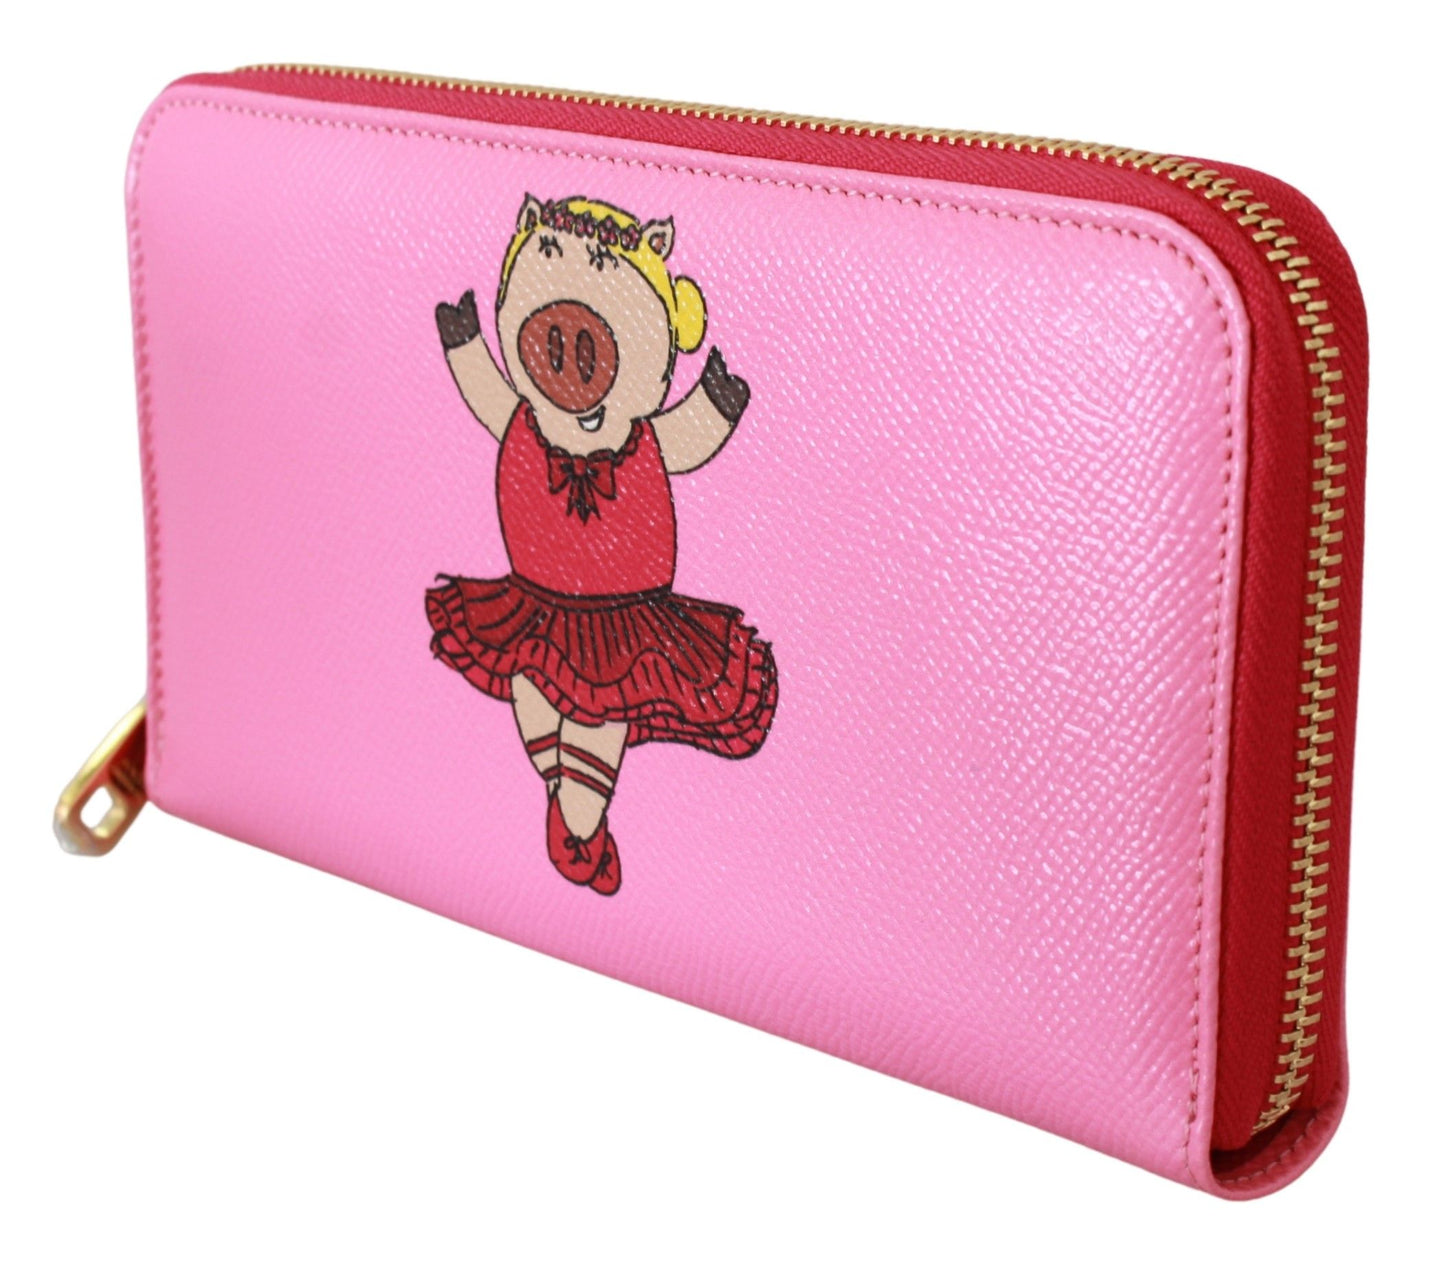 Elegant Pink Leather Continental Wallet